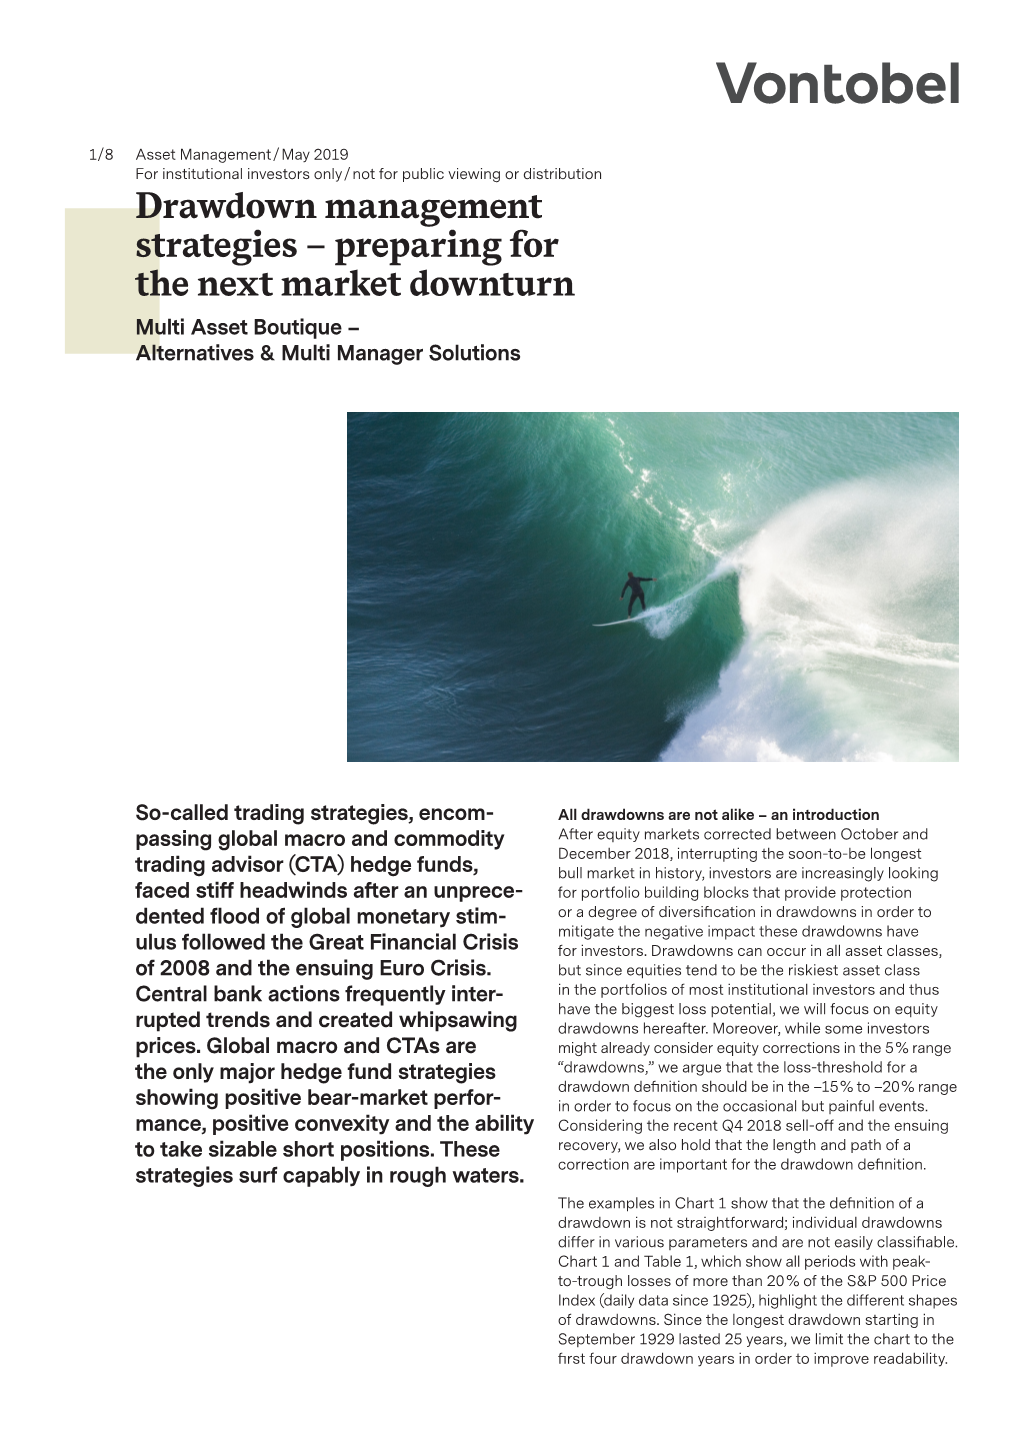 Drawdown Management Strategies – Preparing for the Next Market Downturn Multi Asset Boutique – Alternatives & Multi Manager Solutions